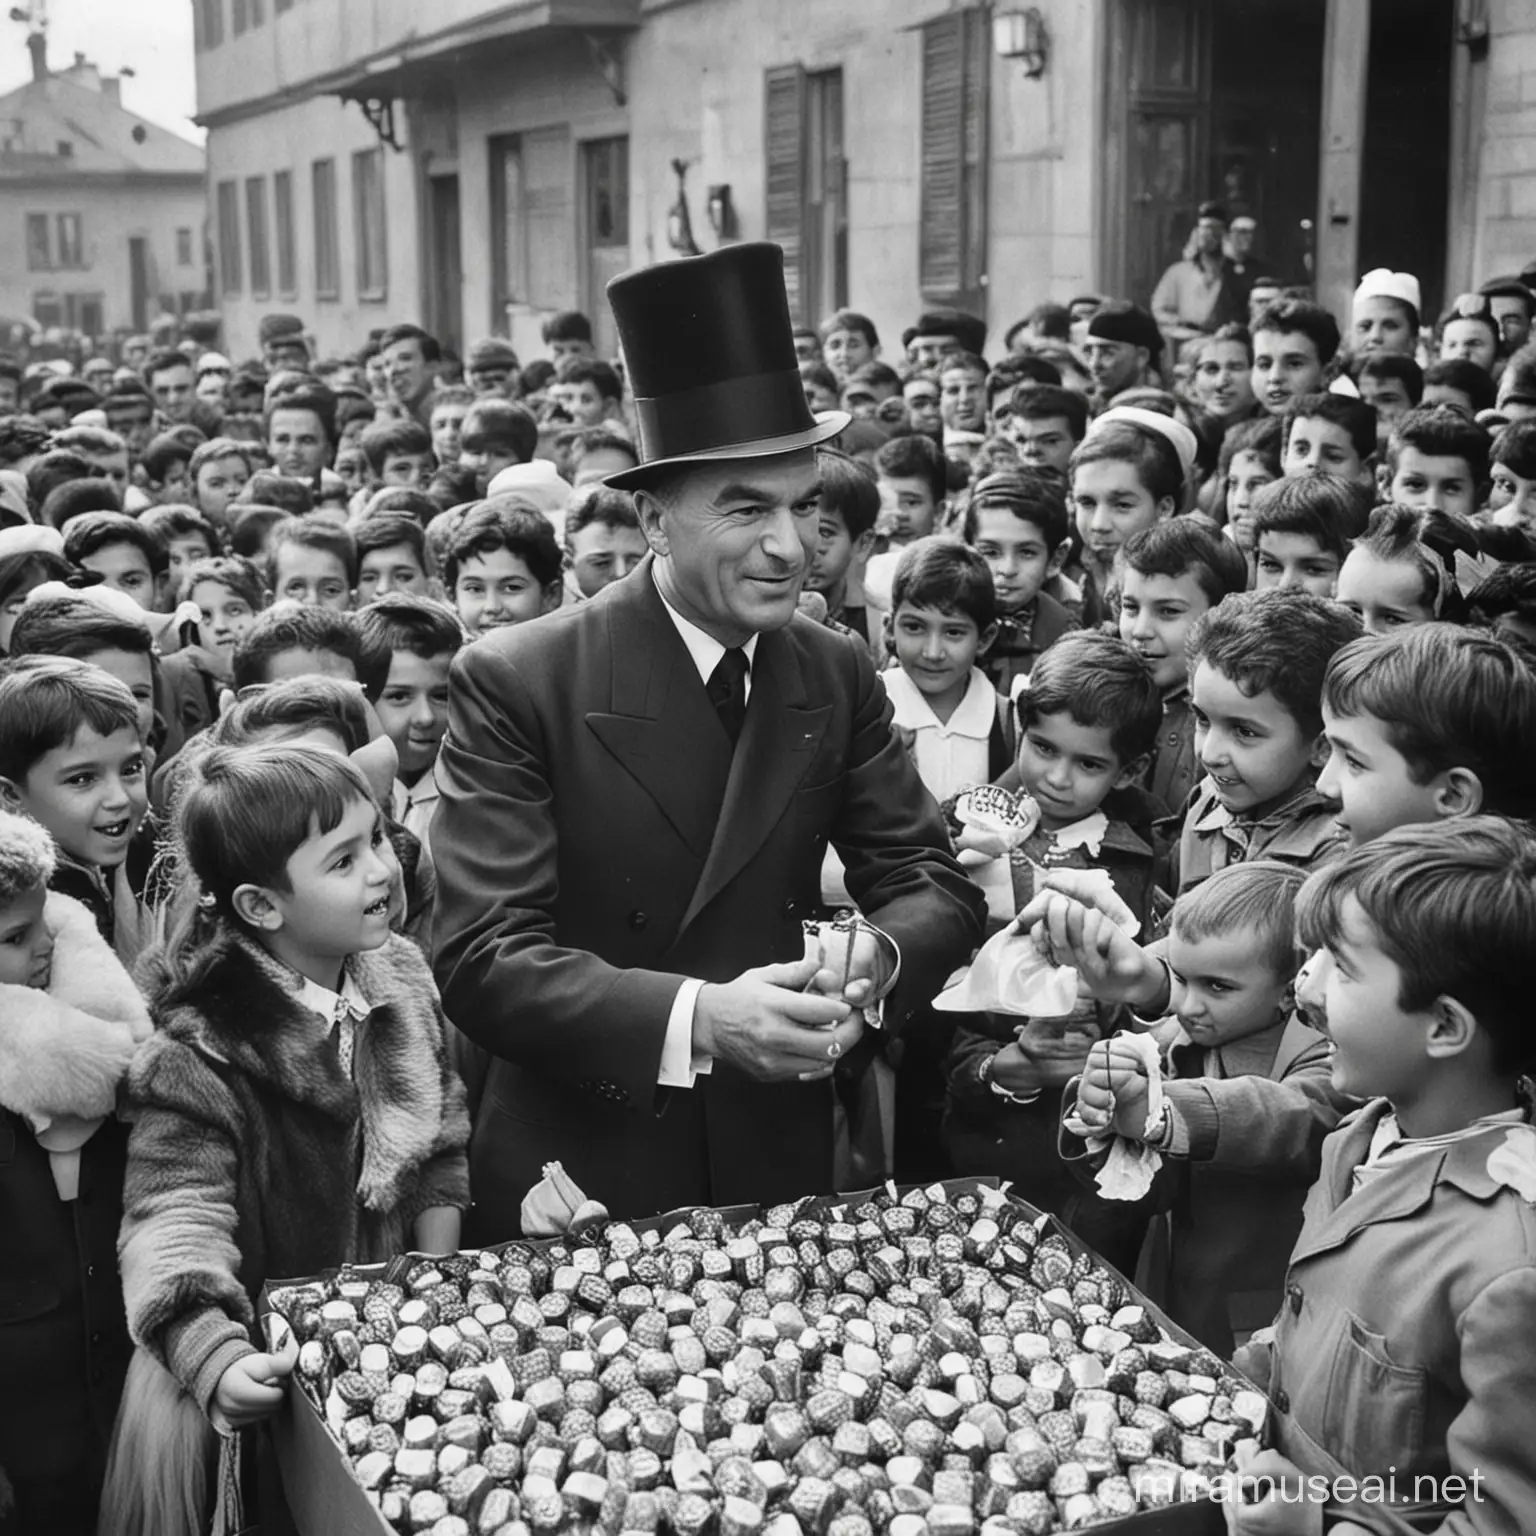 Mustafa Kemal Atatrk Giving Candies to Children in Traditional Turkish Setting